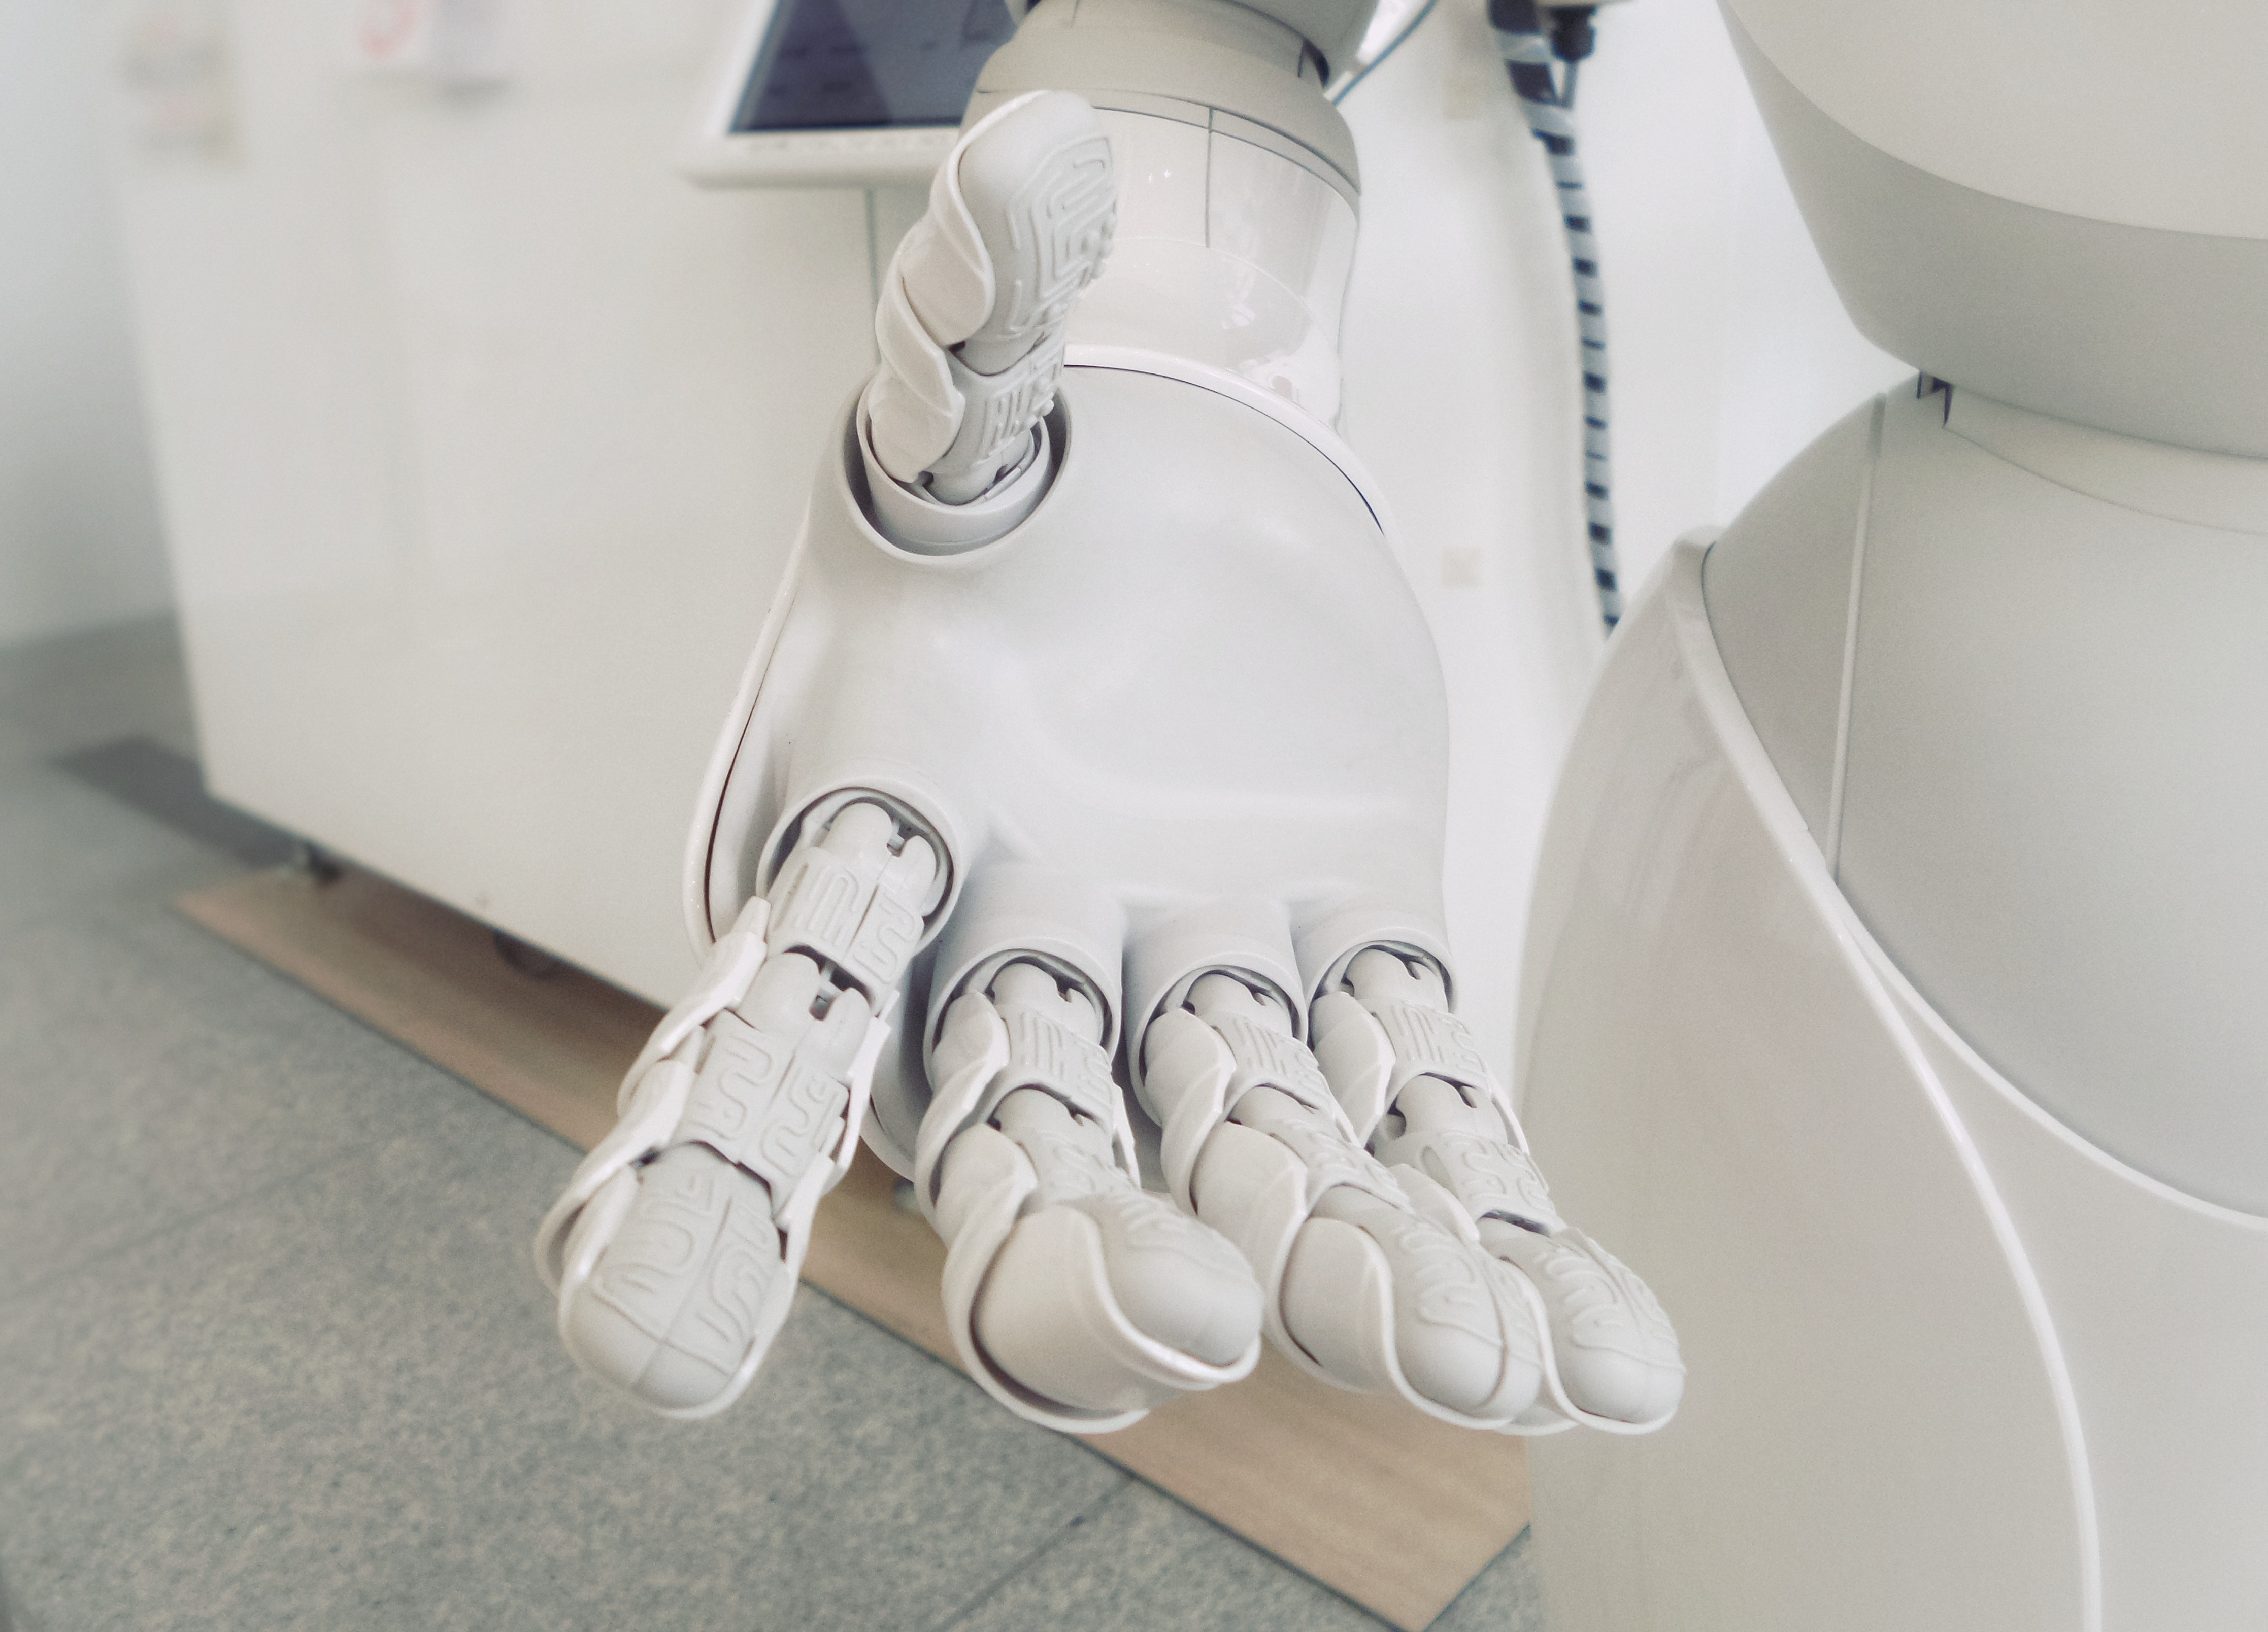 Robot arm reaching out AI